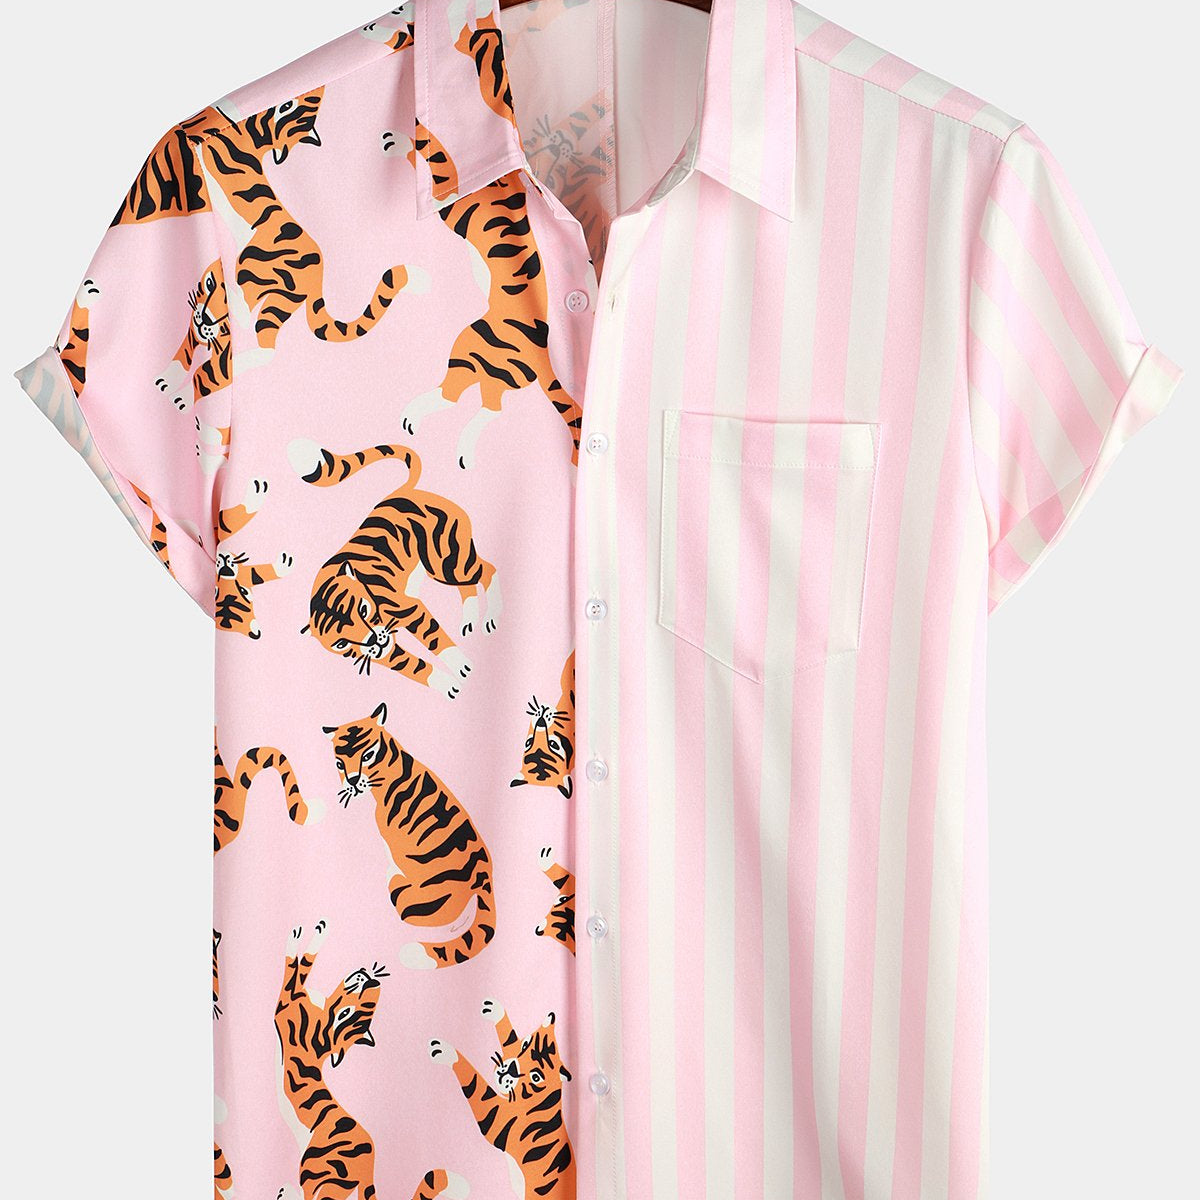 Men's Short Sleeve Striped Pocket Hawaiian Shirt